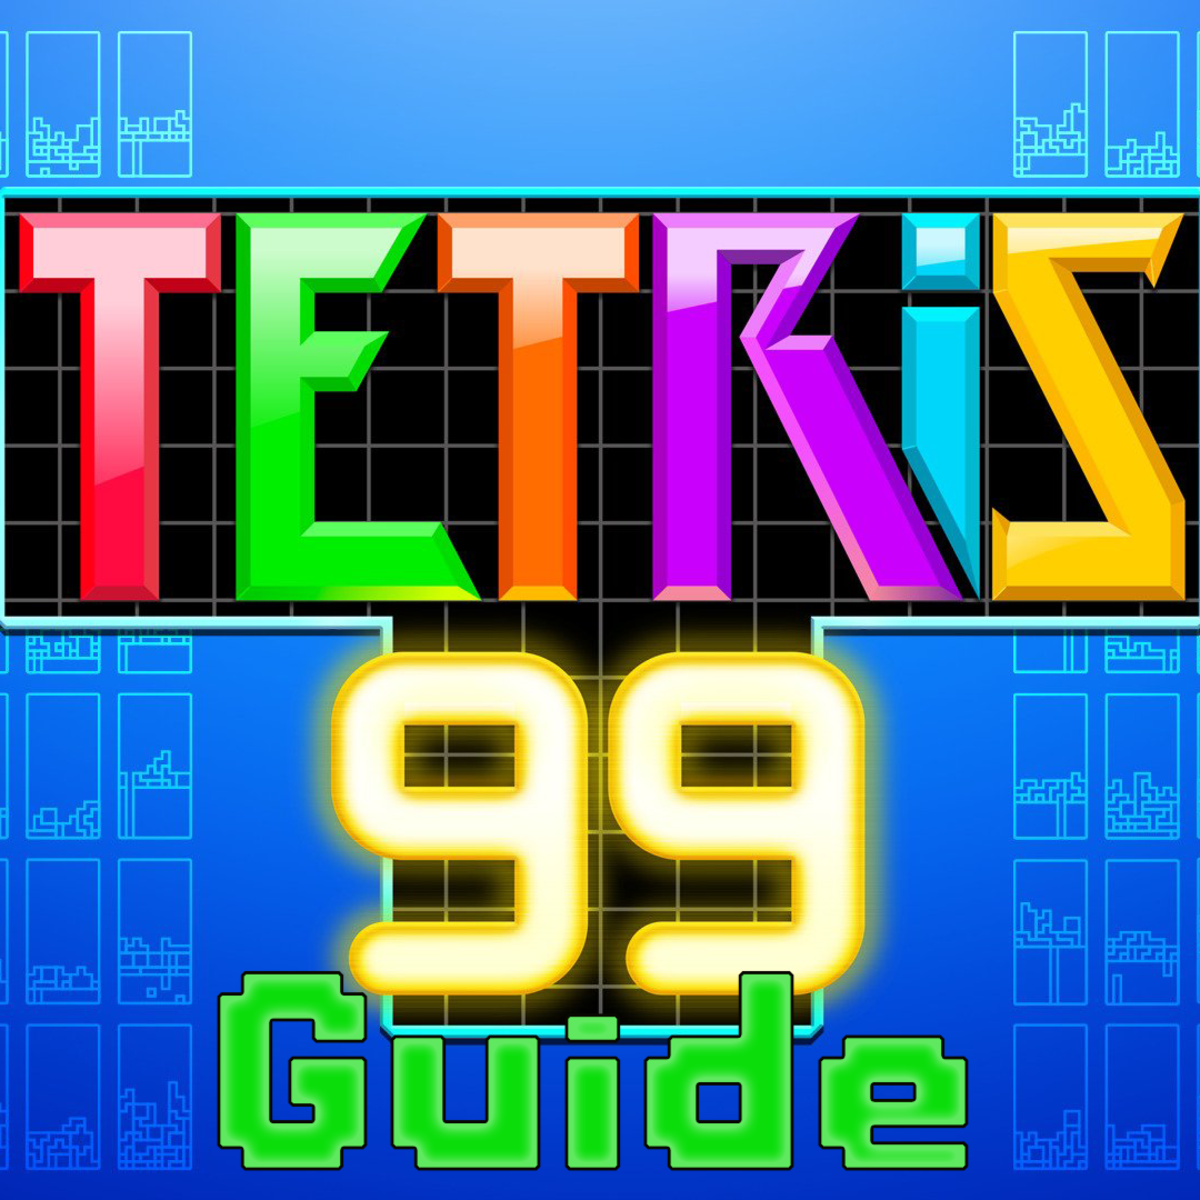 Datum skolde centeret Tetris 99” on Nintendo Switch Guide: How to Play - LevelSkip